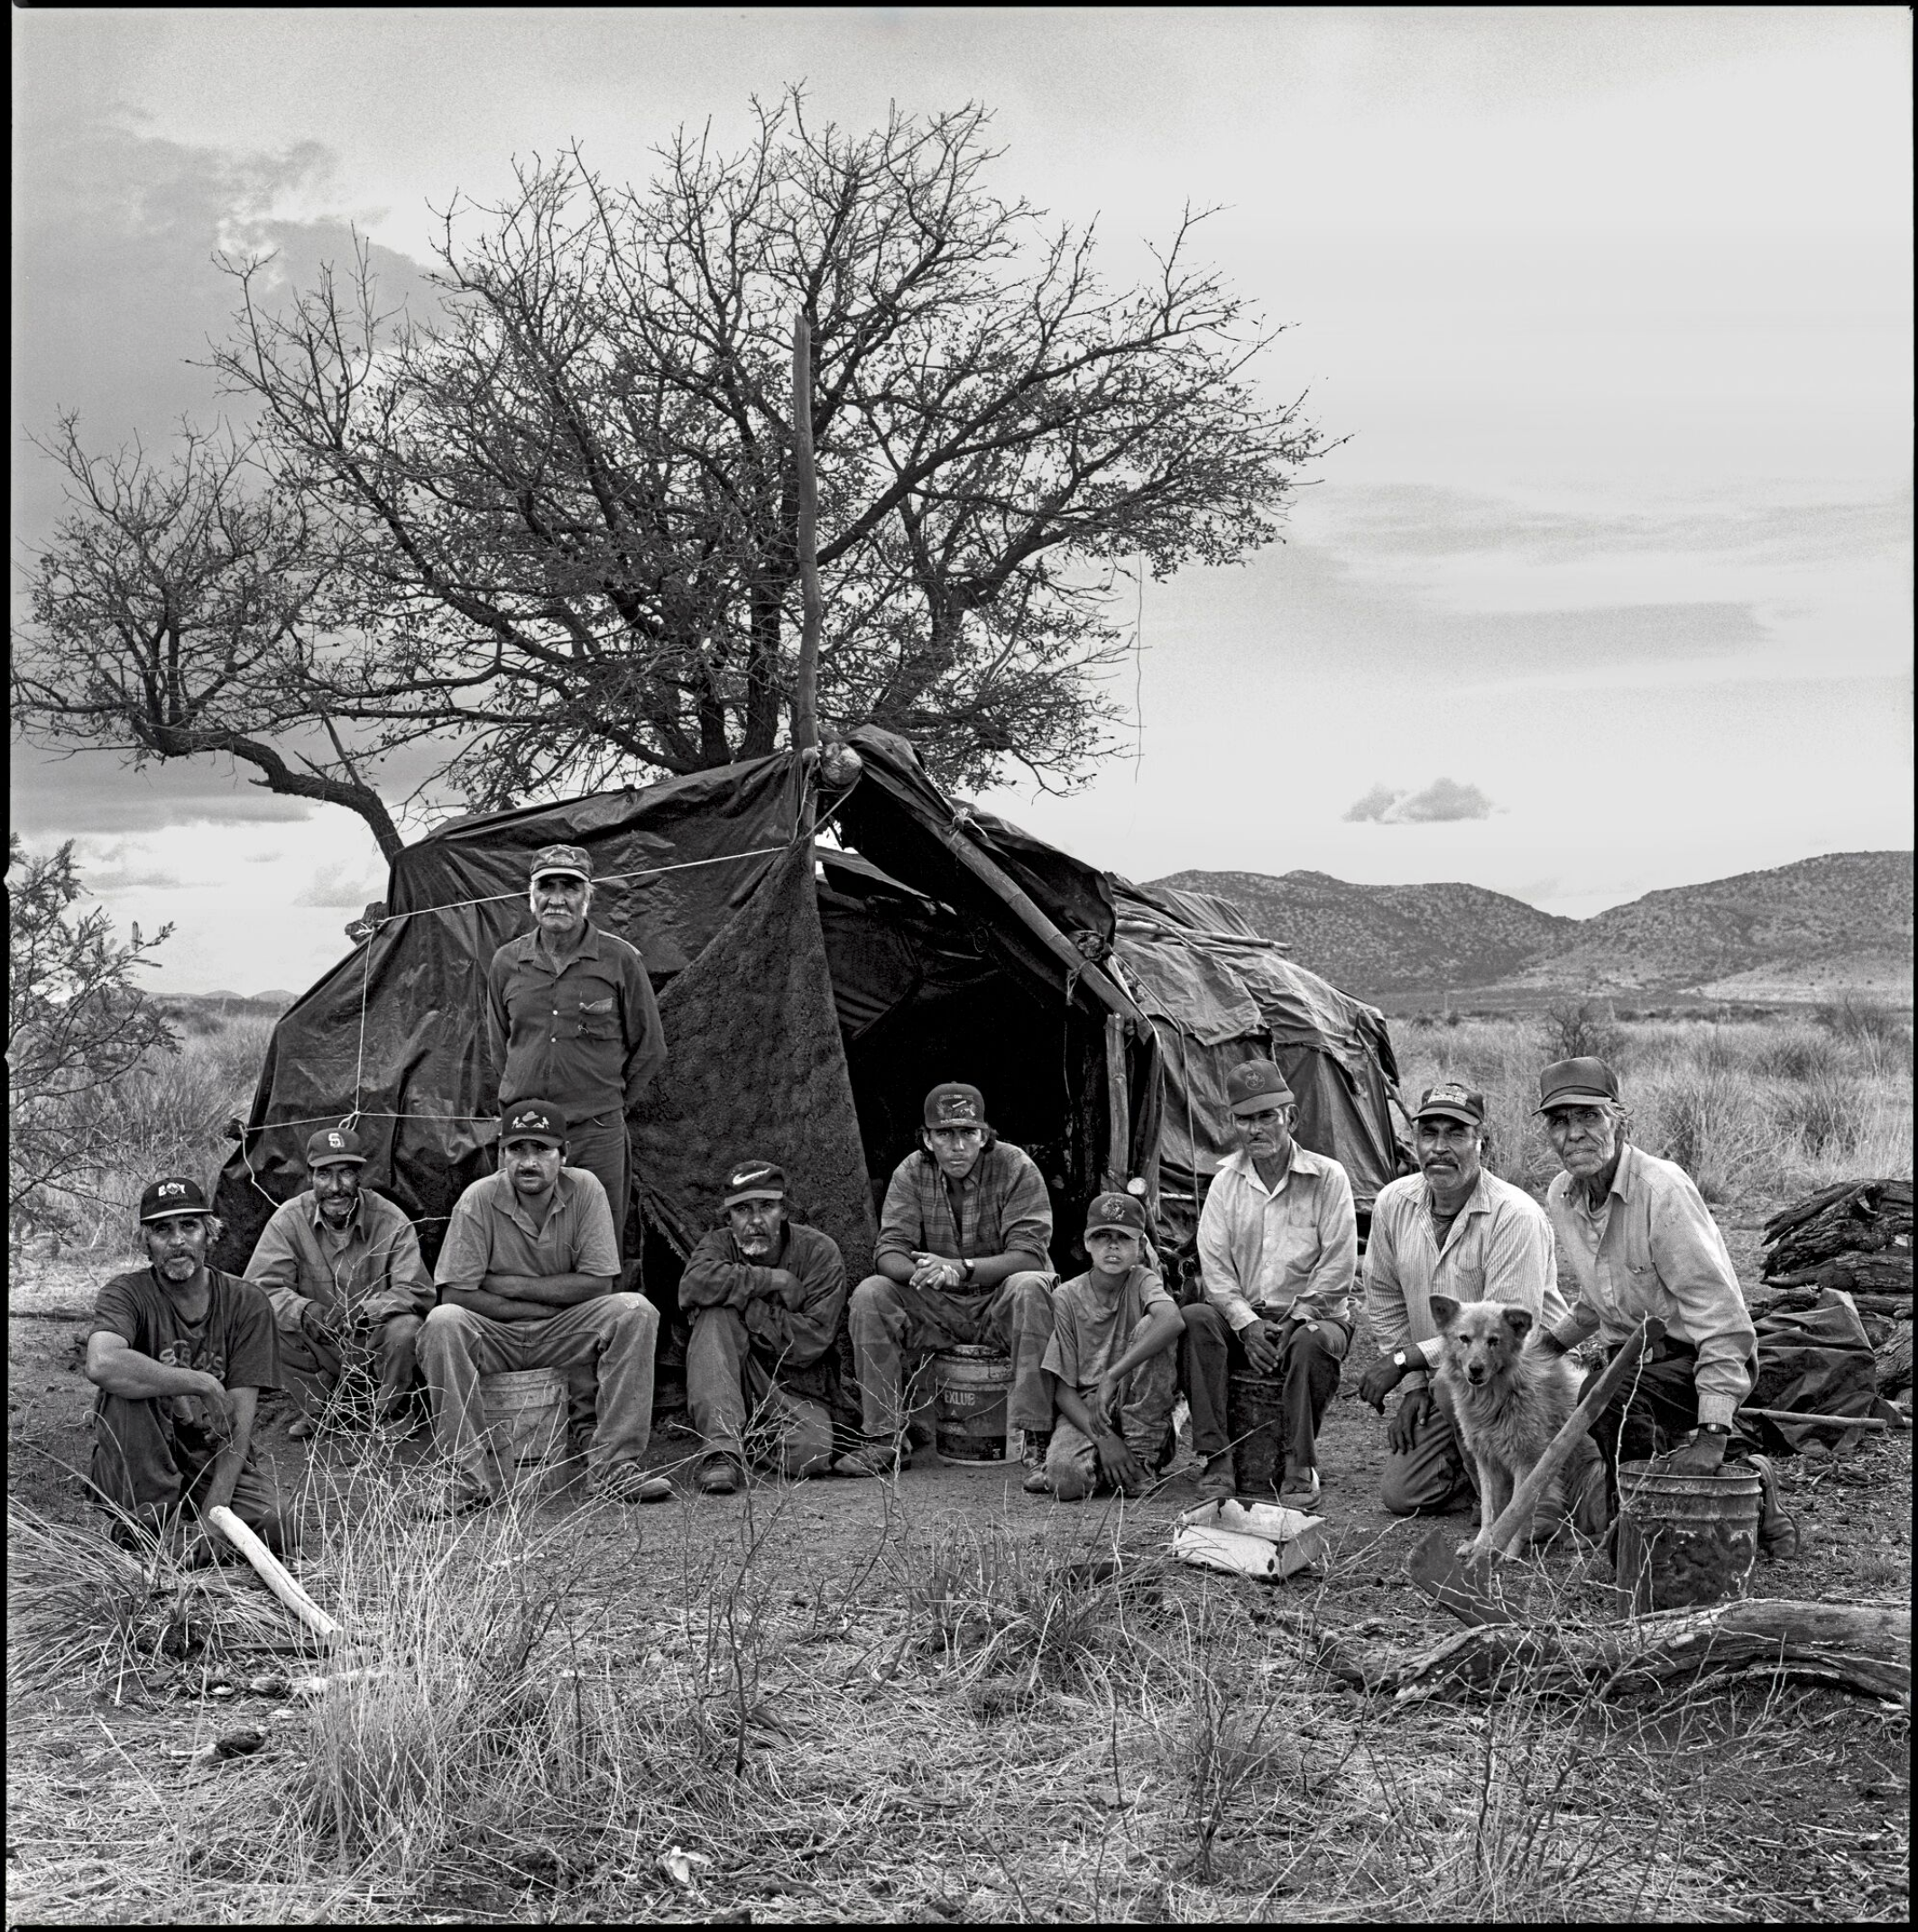 Palmilleros (Grass Cutters), Border Camp, Arizona/Sonora Border, 2000